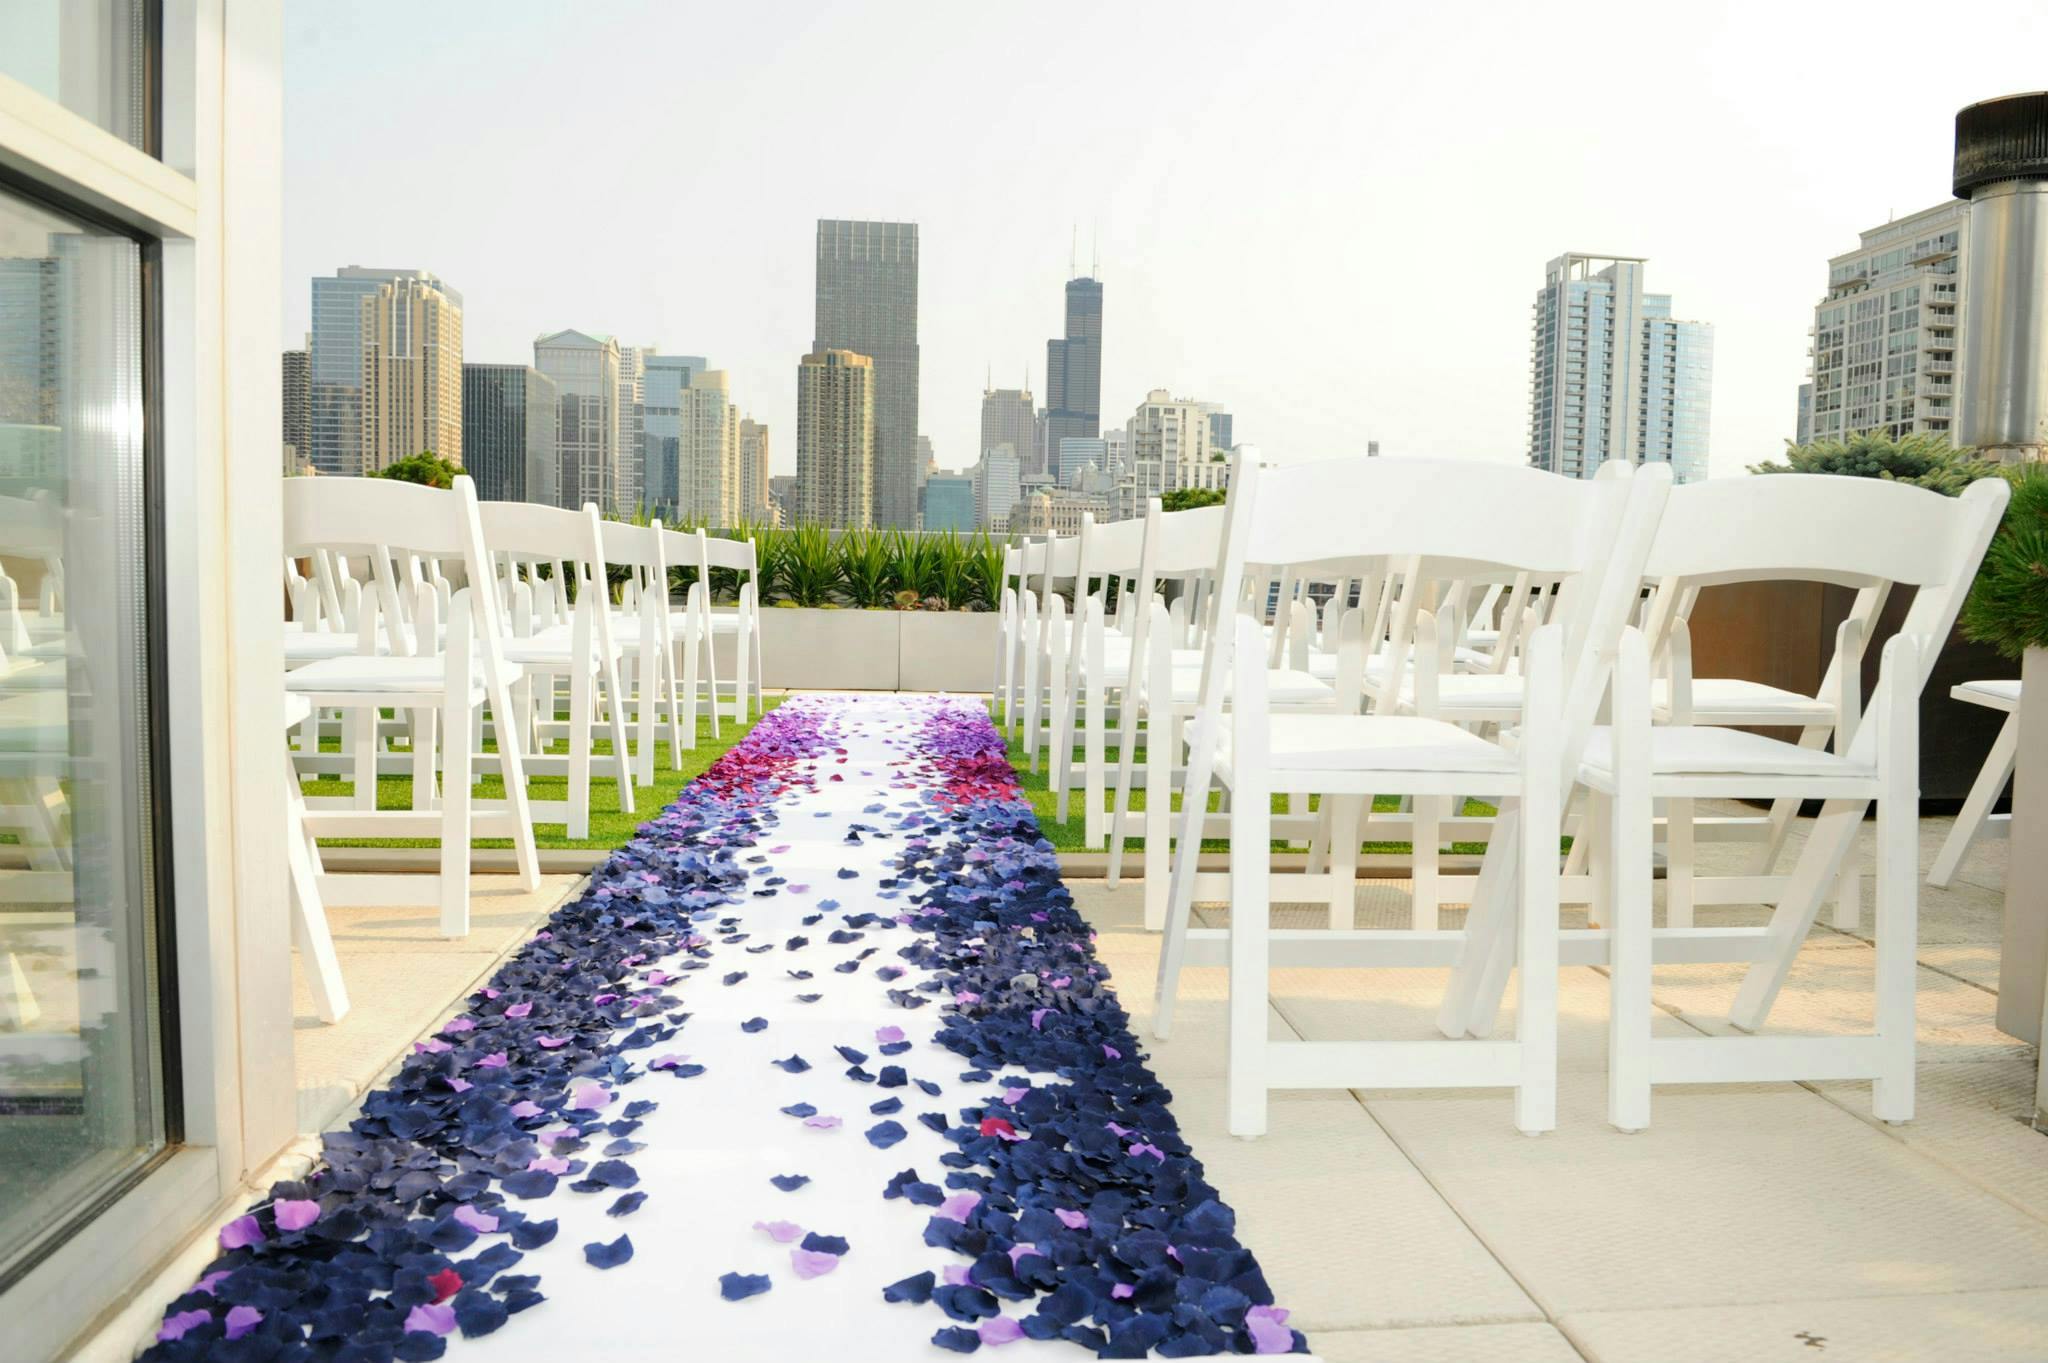 Ombre rose petal wedding aisle décor at surprise rooftop wedding | PartySlate